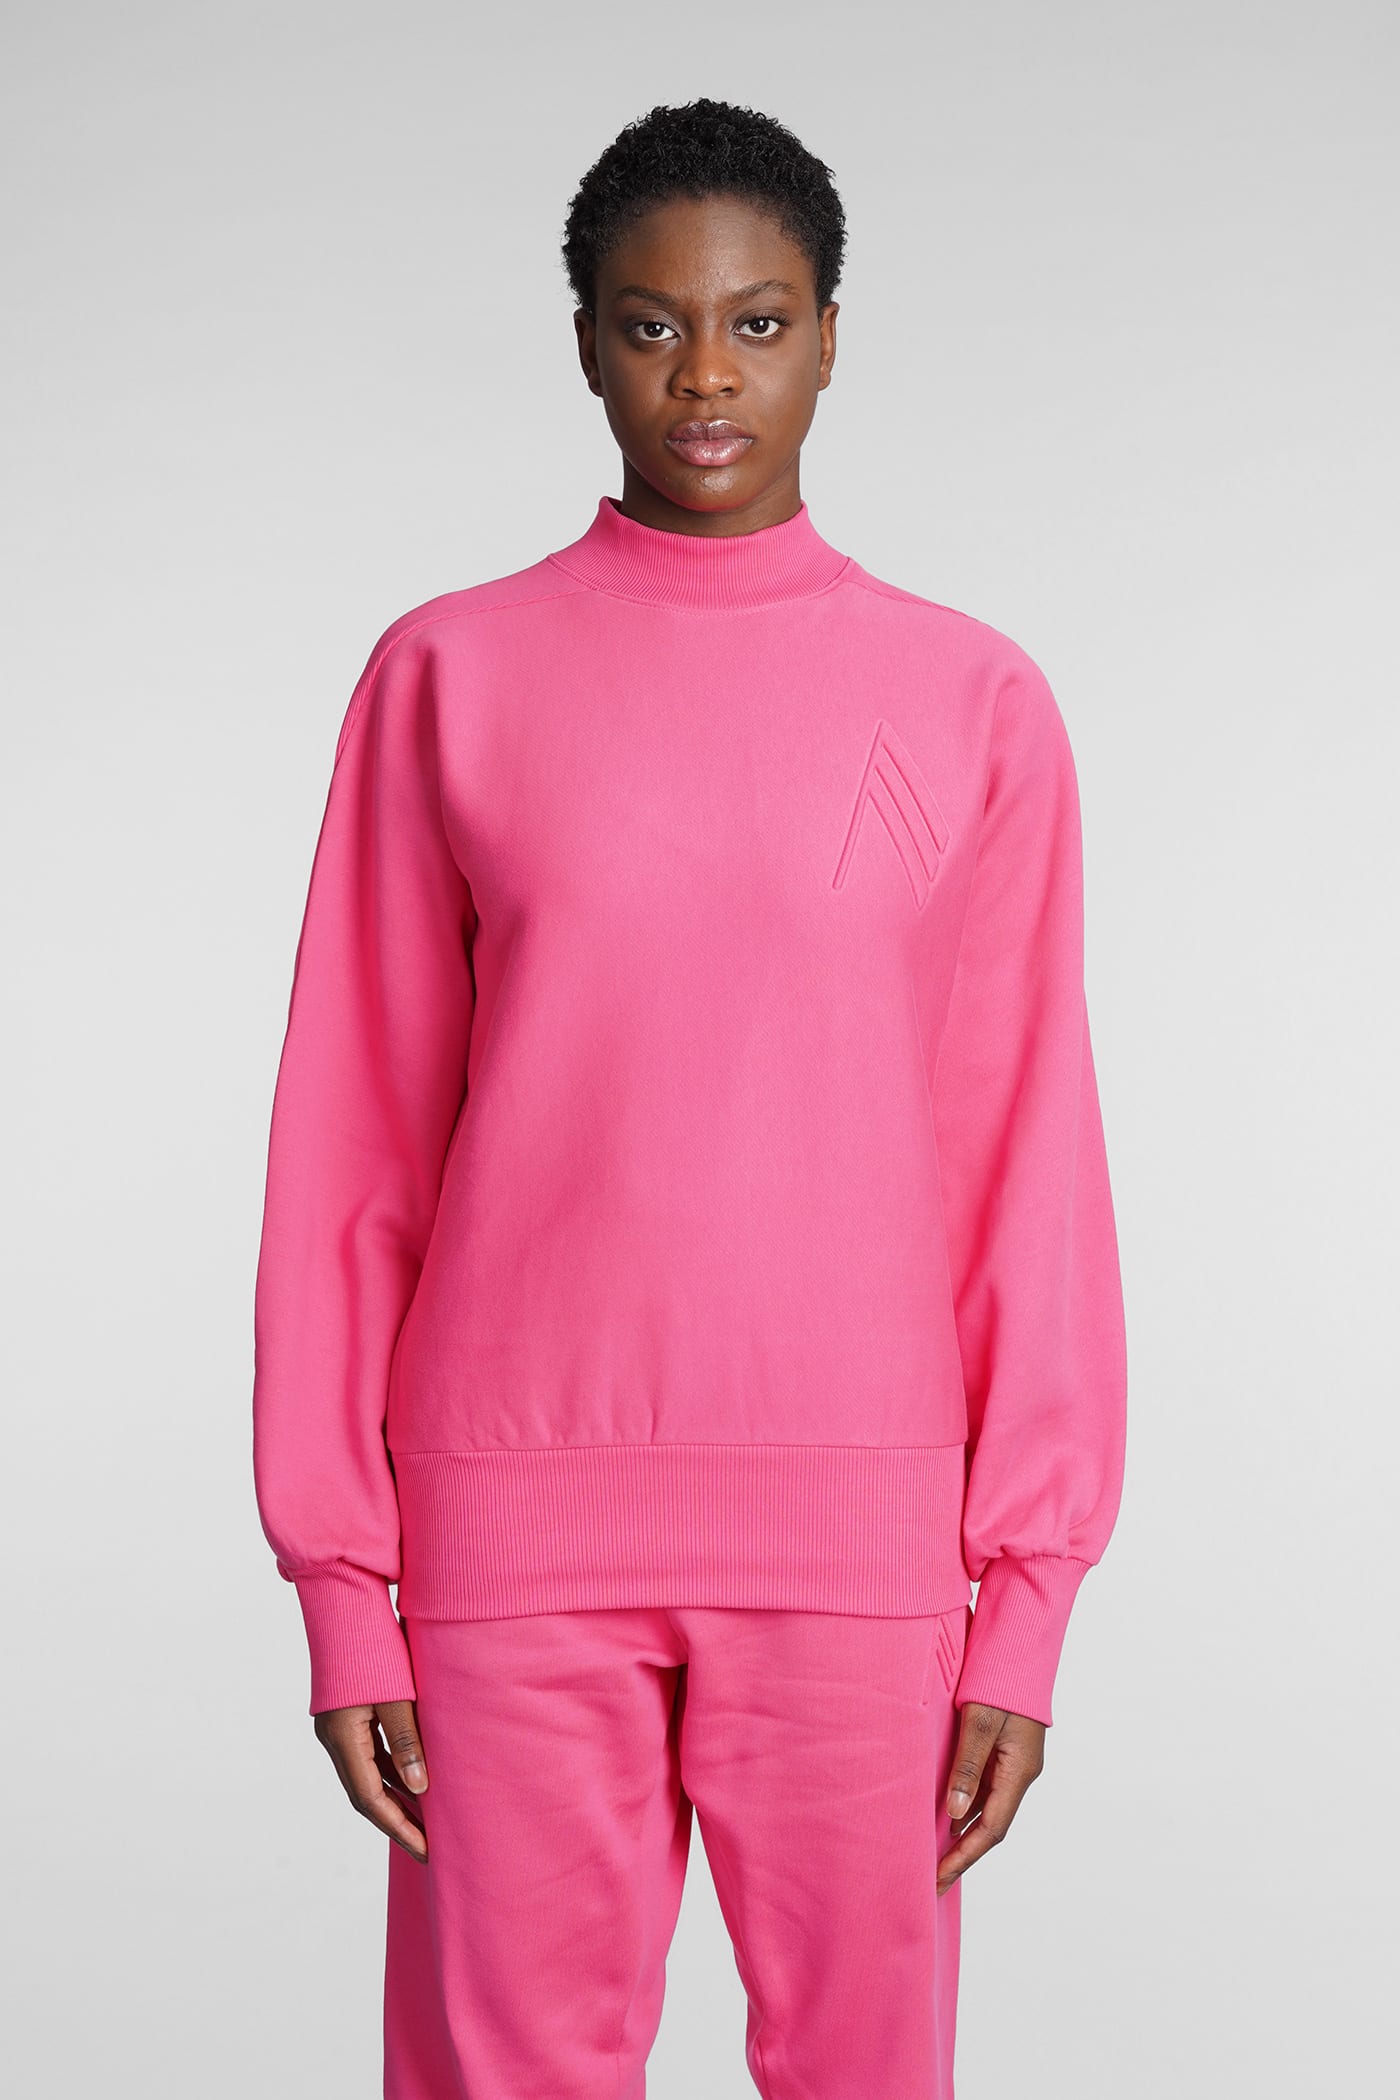 The Attico Felpa Sweatshirt In Rose-pink Cotton